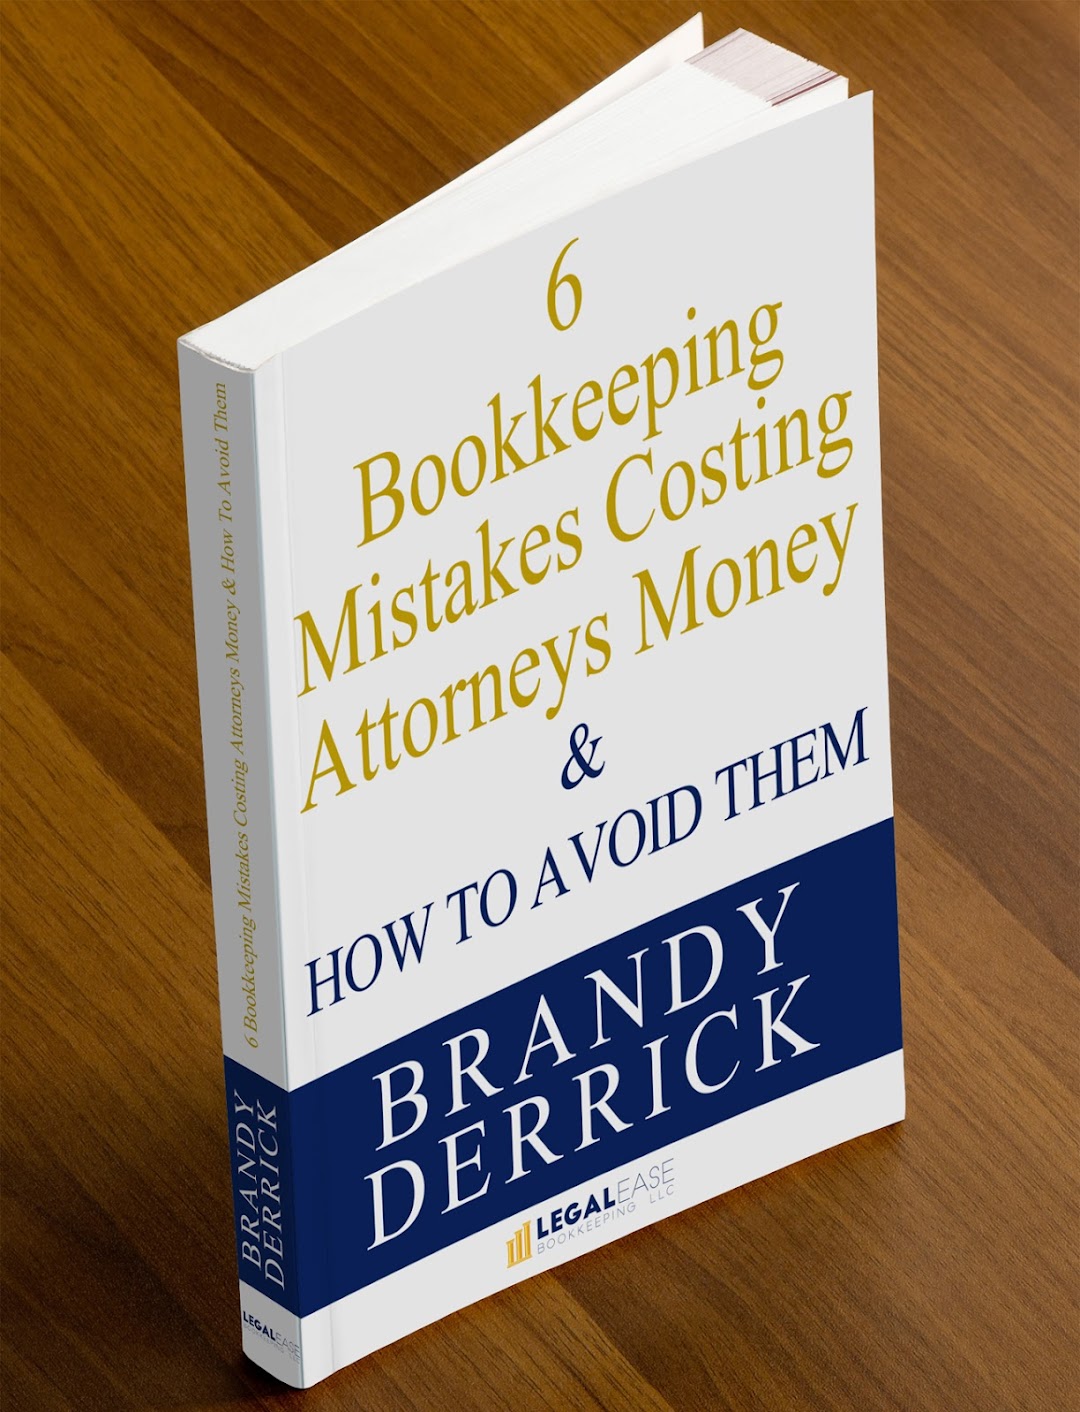 Legal Ease Bookkeeping, LLC